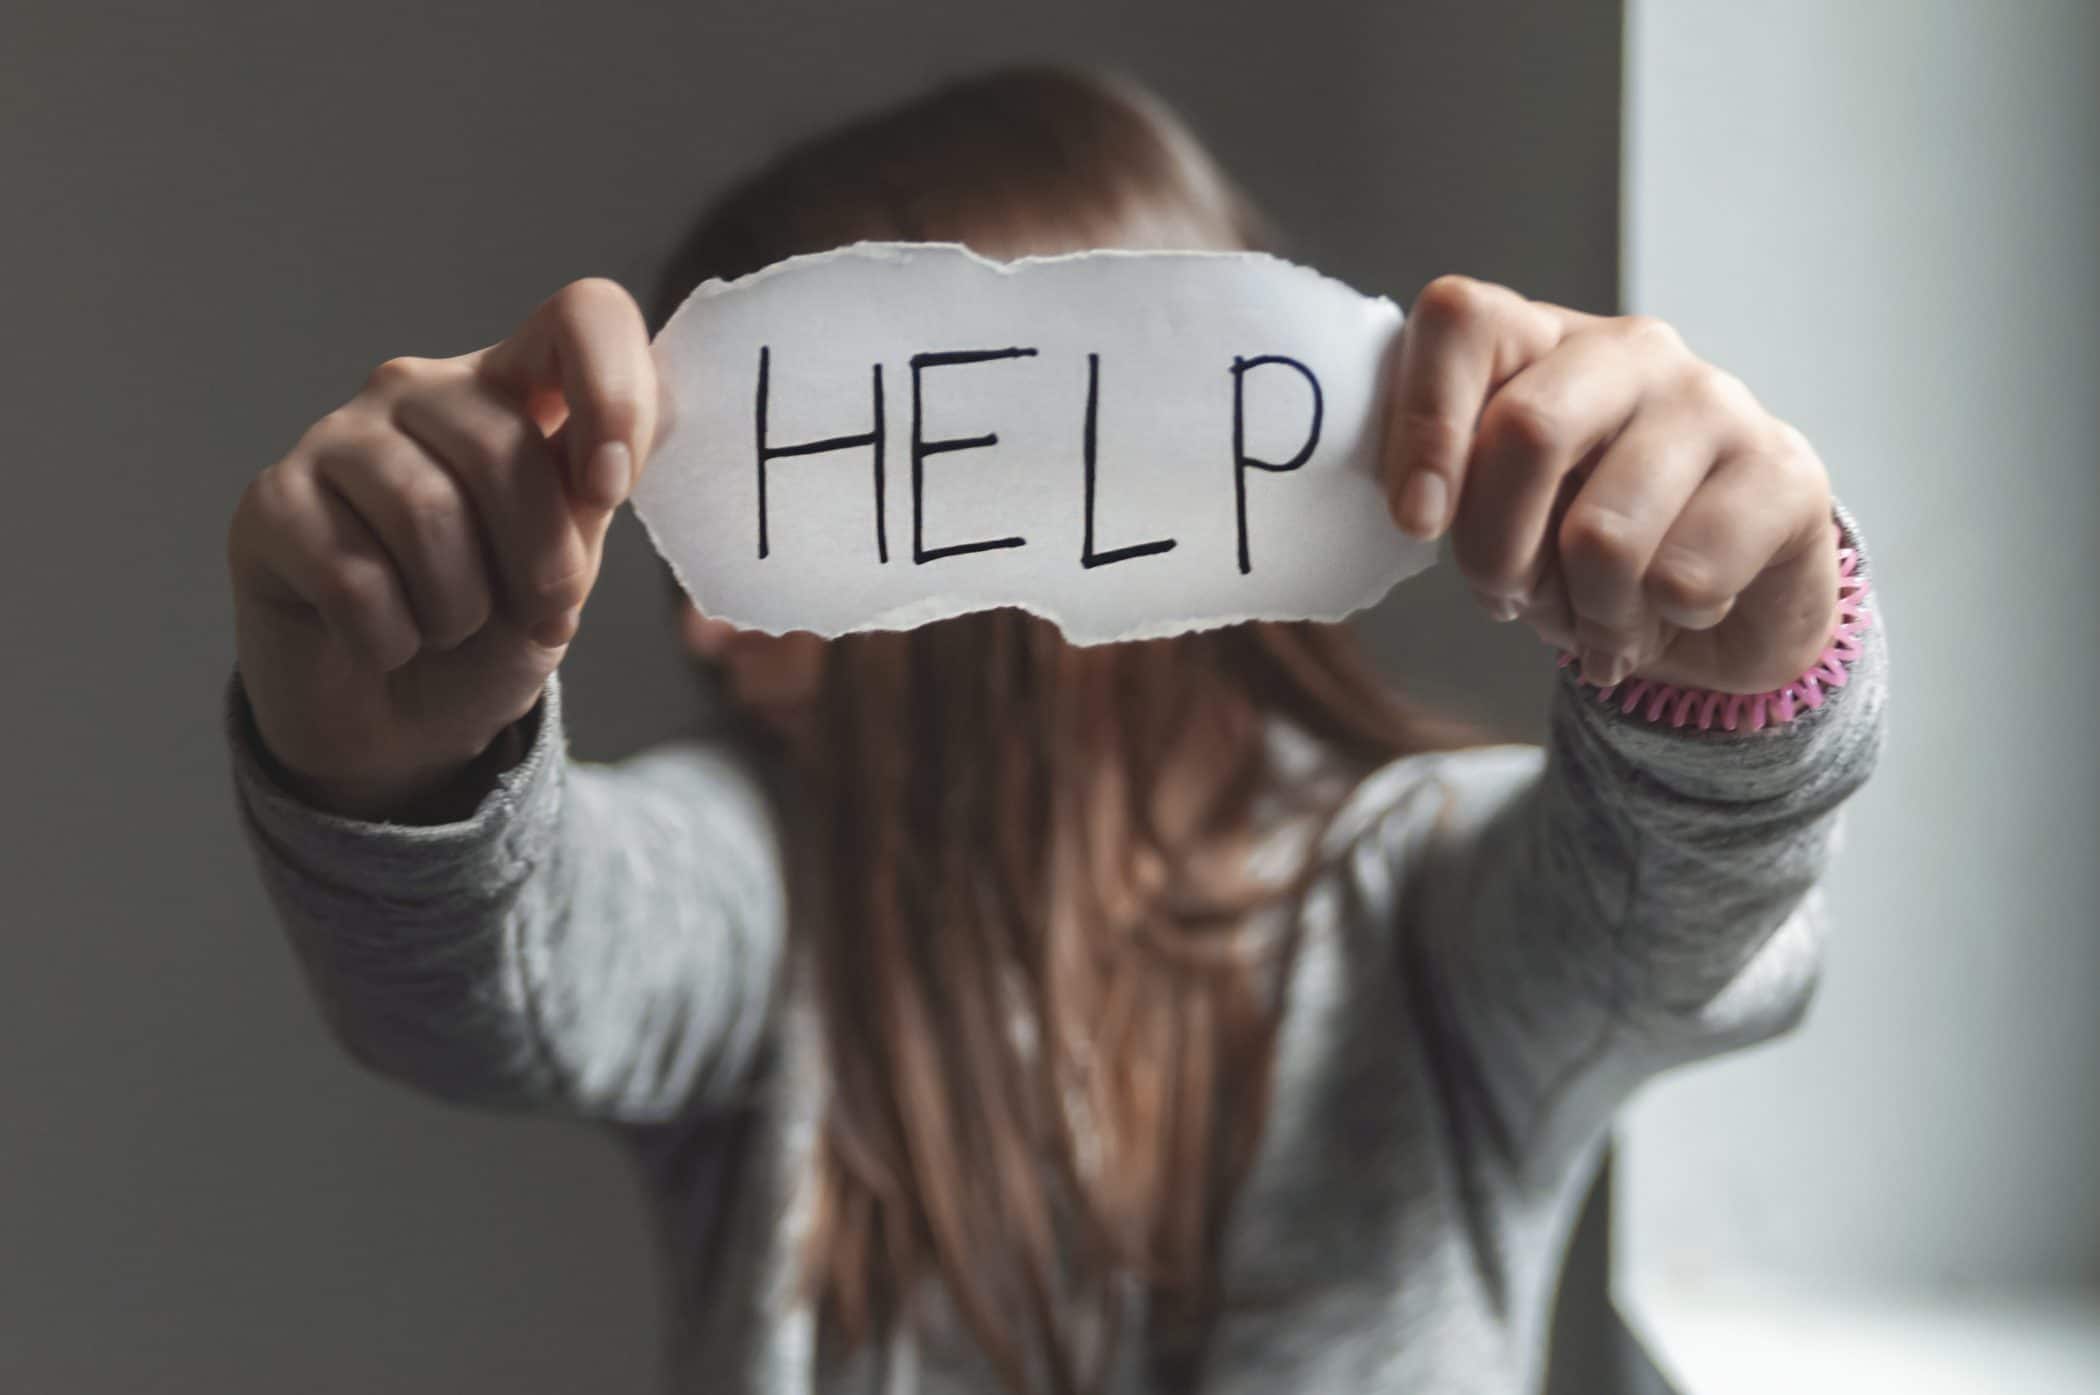 Girl asking for help